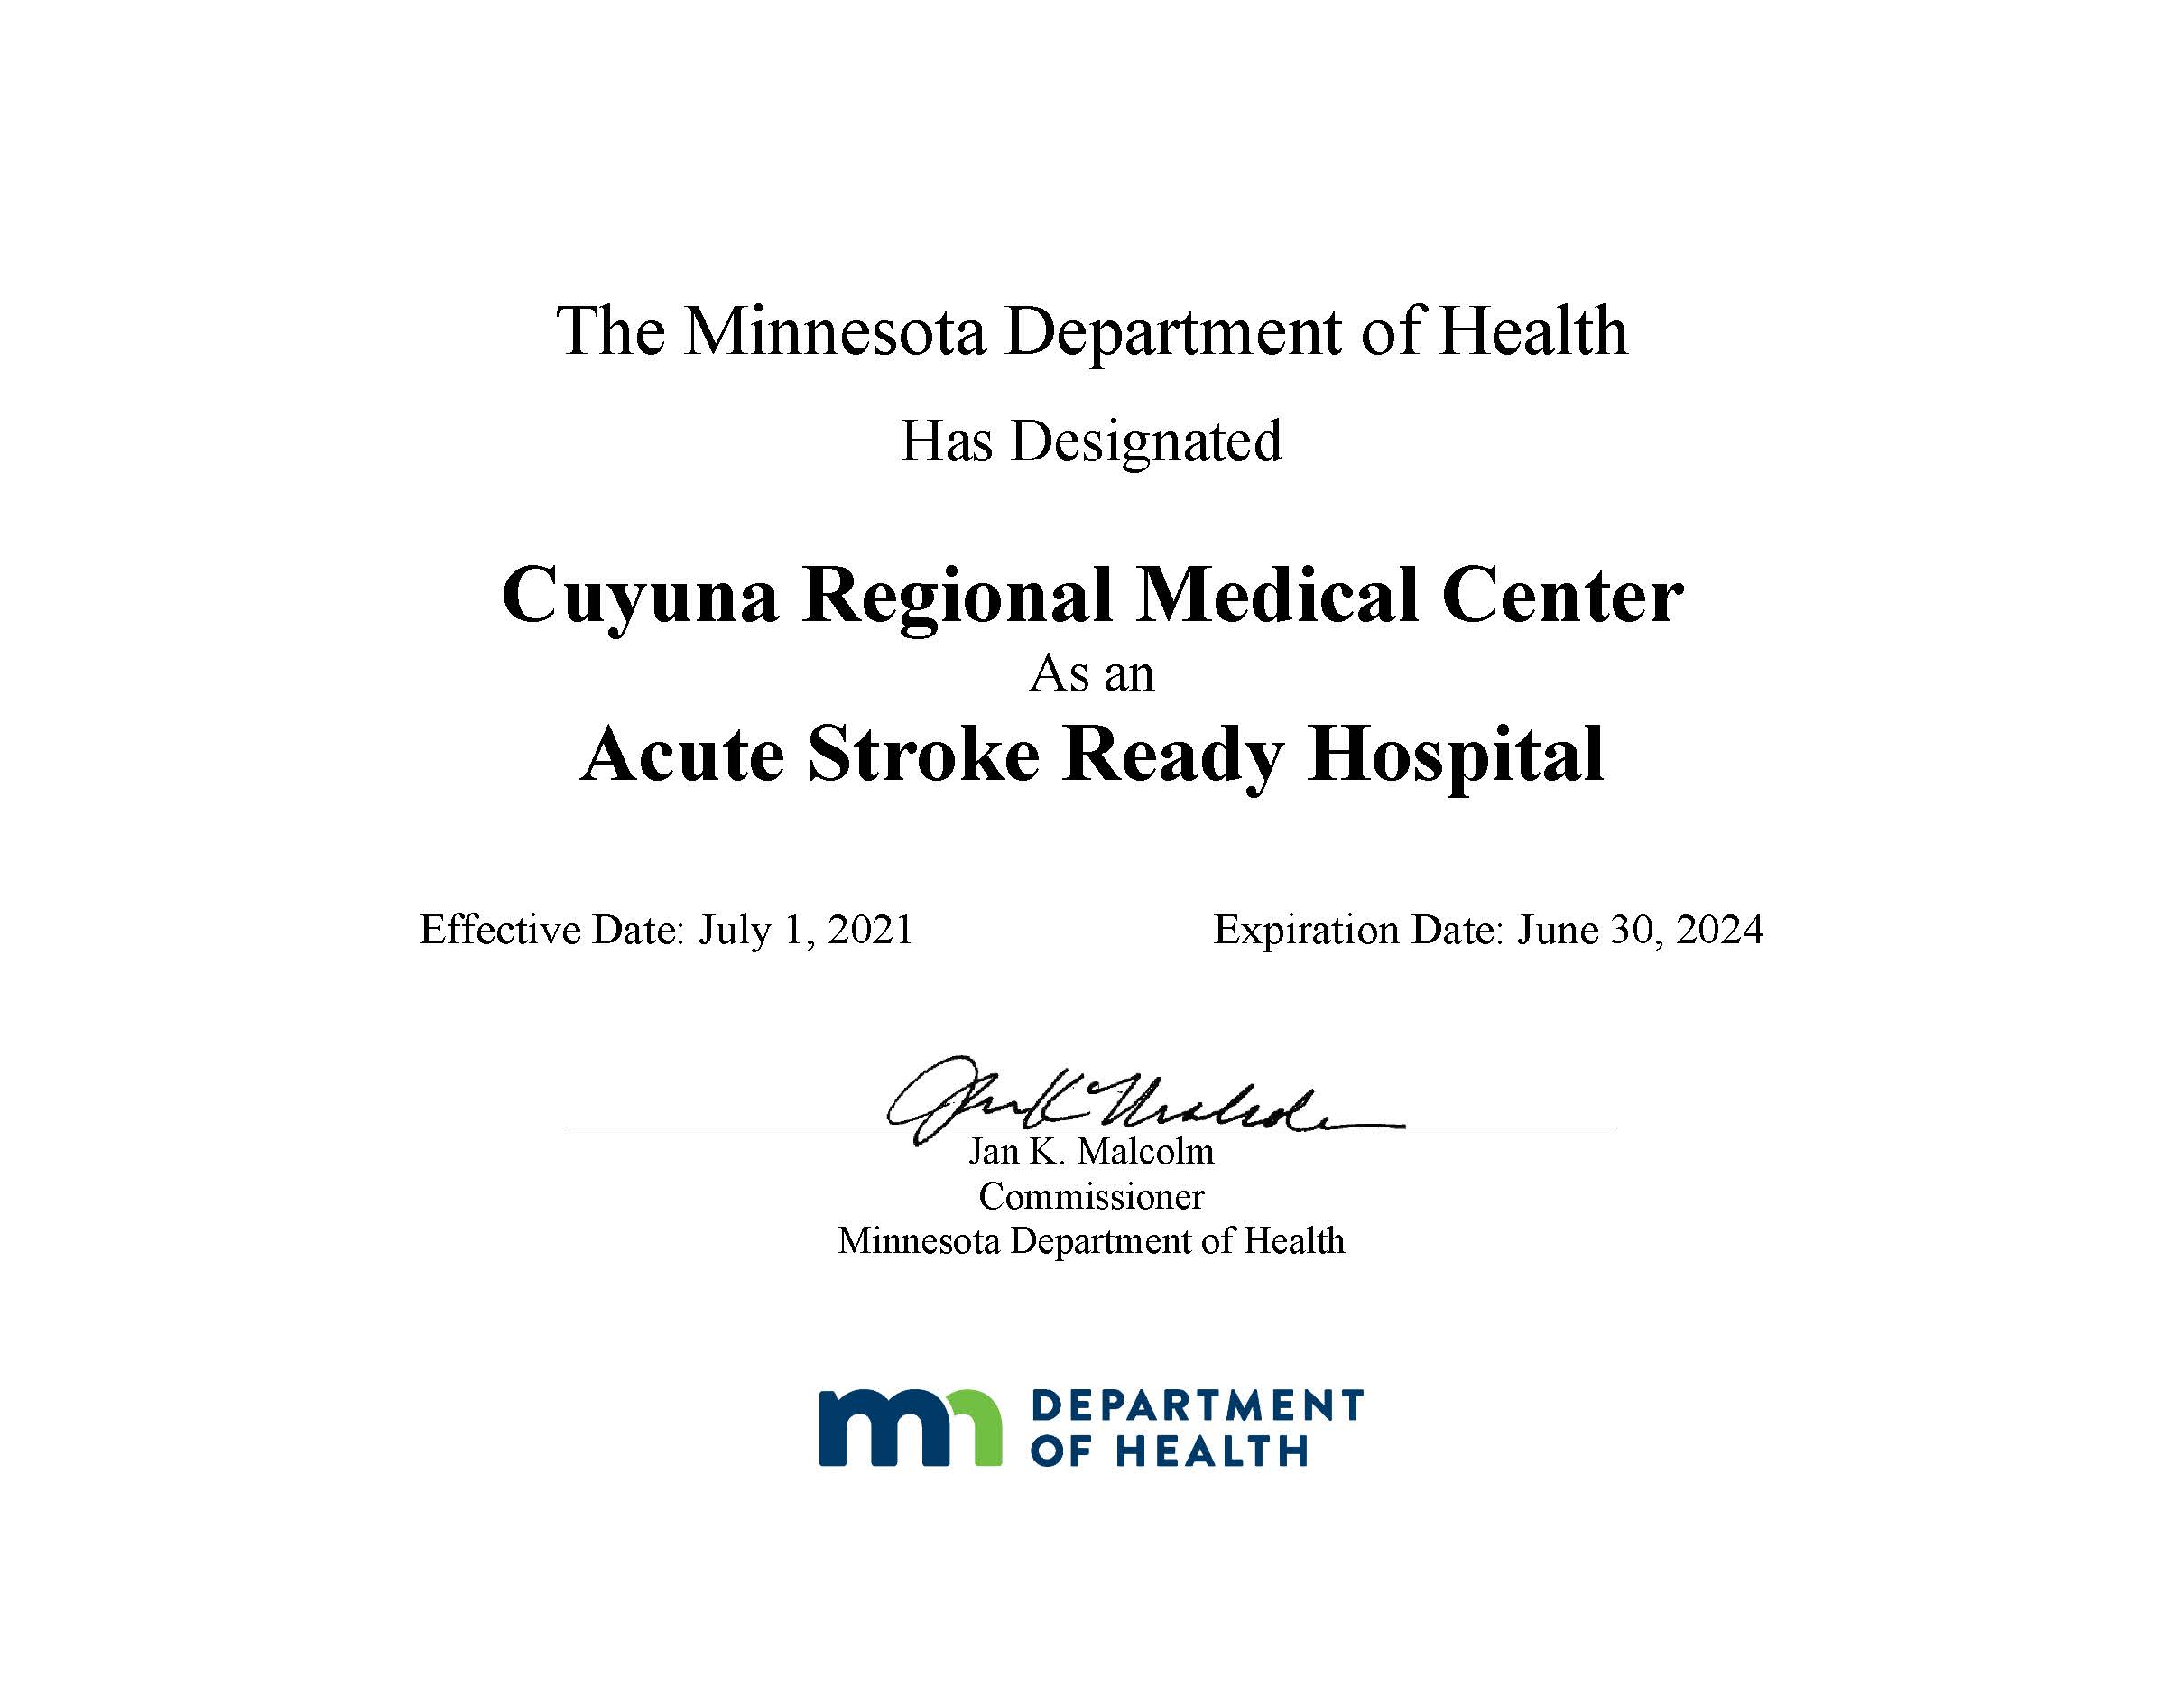 Cuyuna_Regional_Medical_Center_ASRH_Certificate.jpg